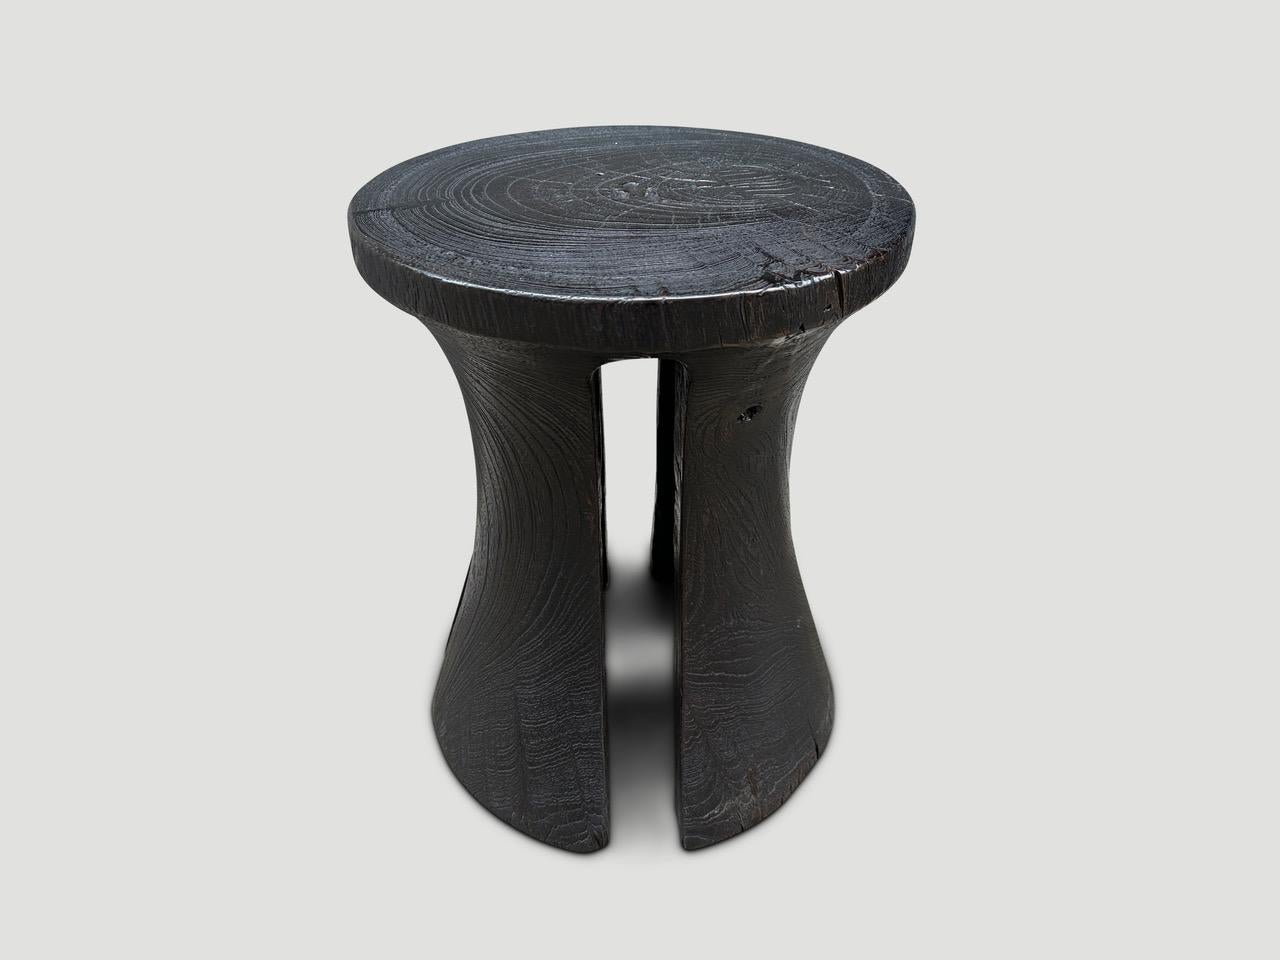 Organic Modern Andrianna Shamaris Sculptural Teak Wood Side Table or Stool For Sale